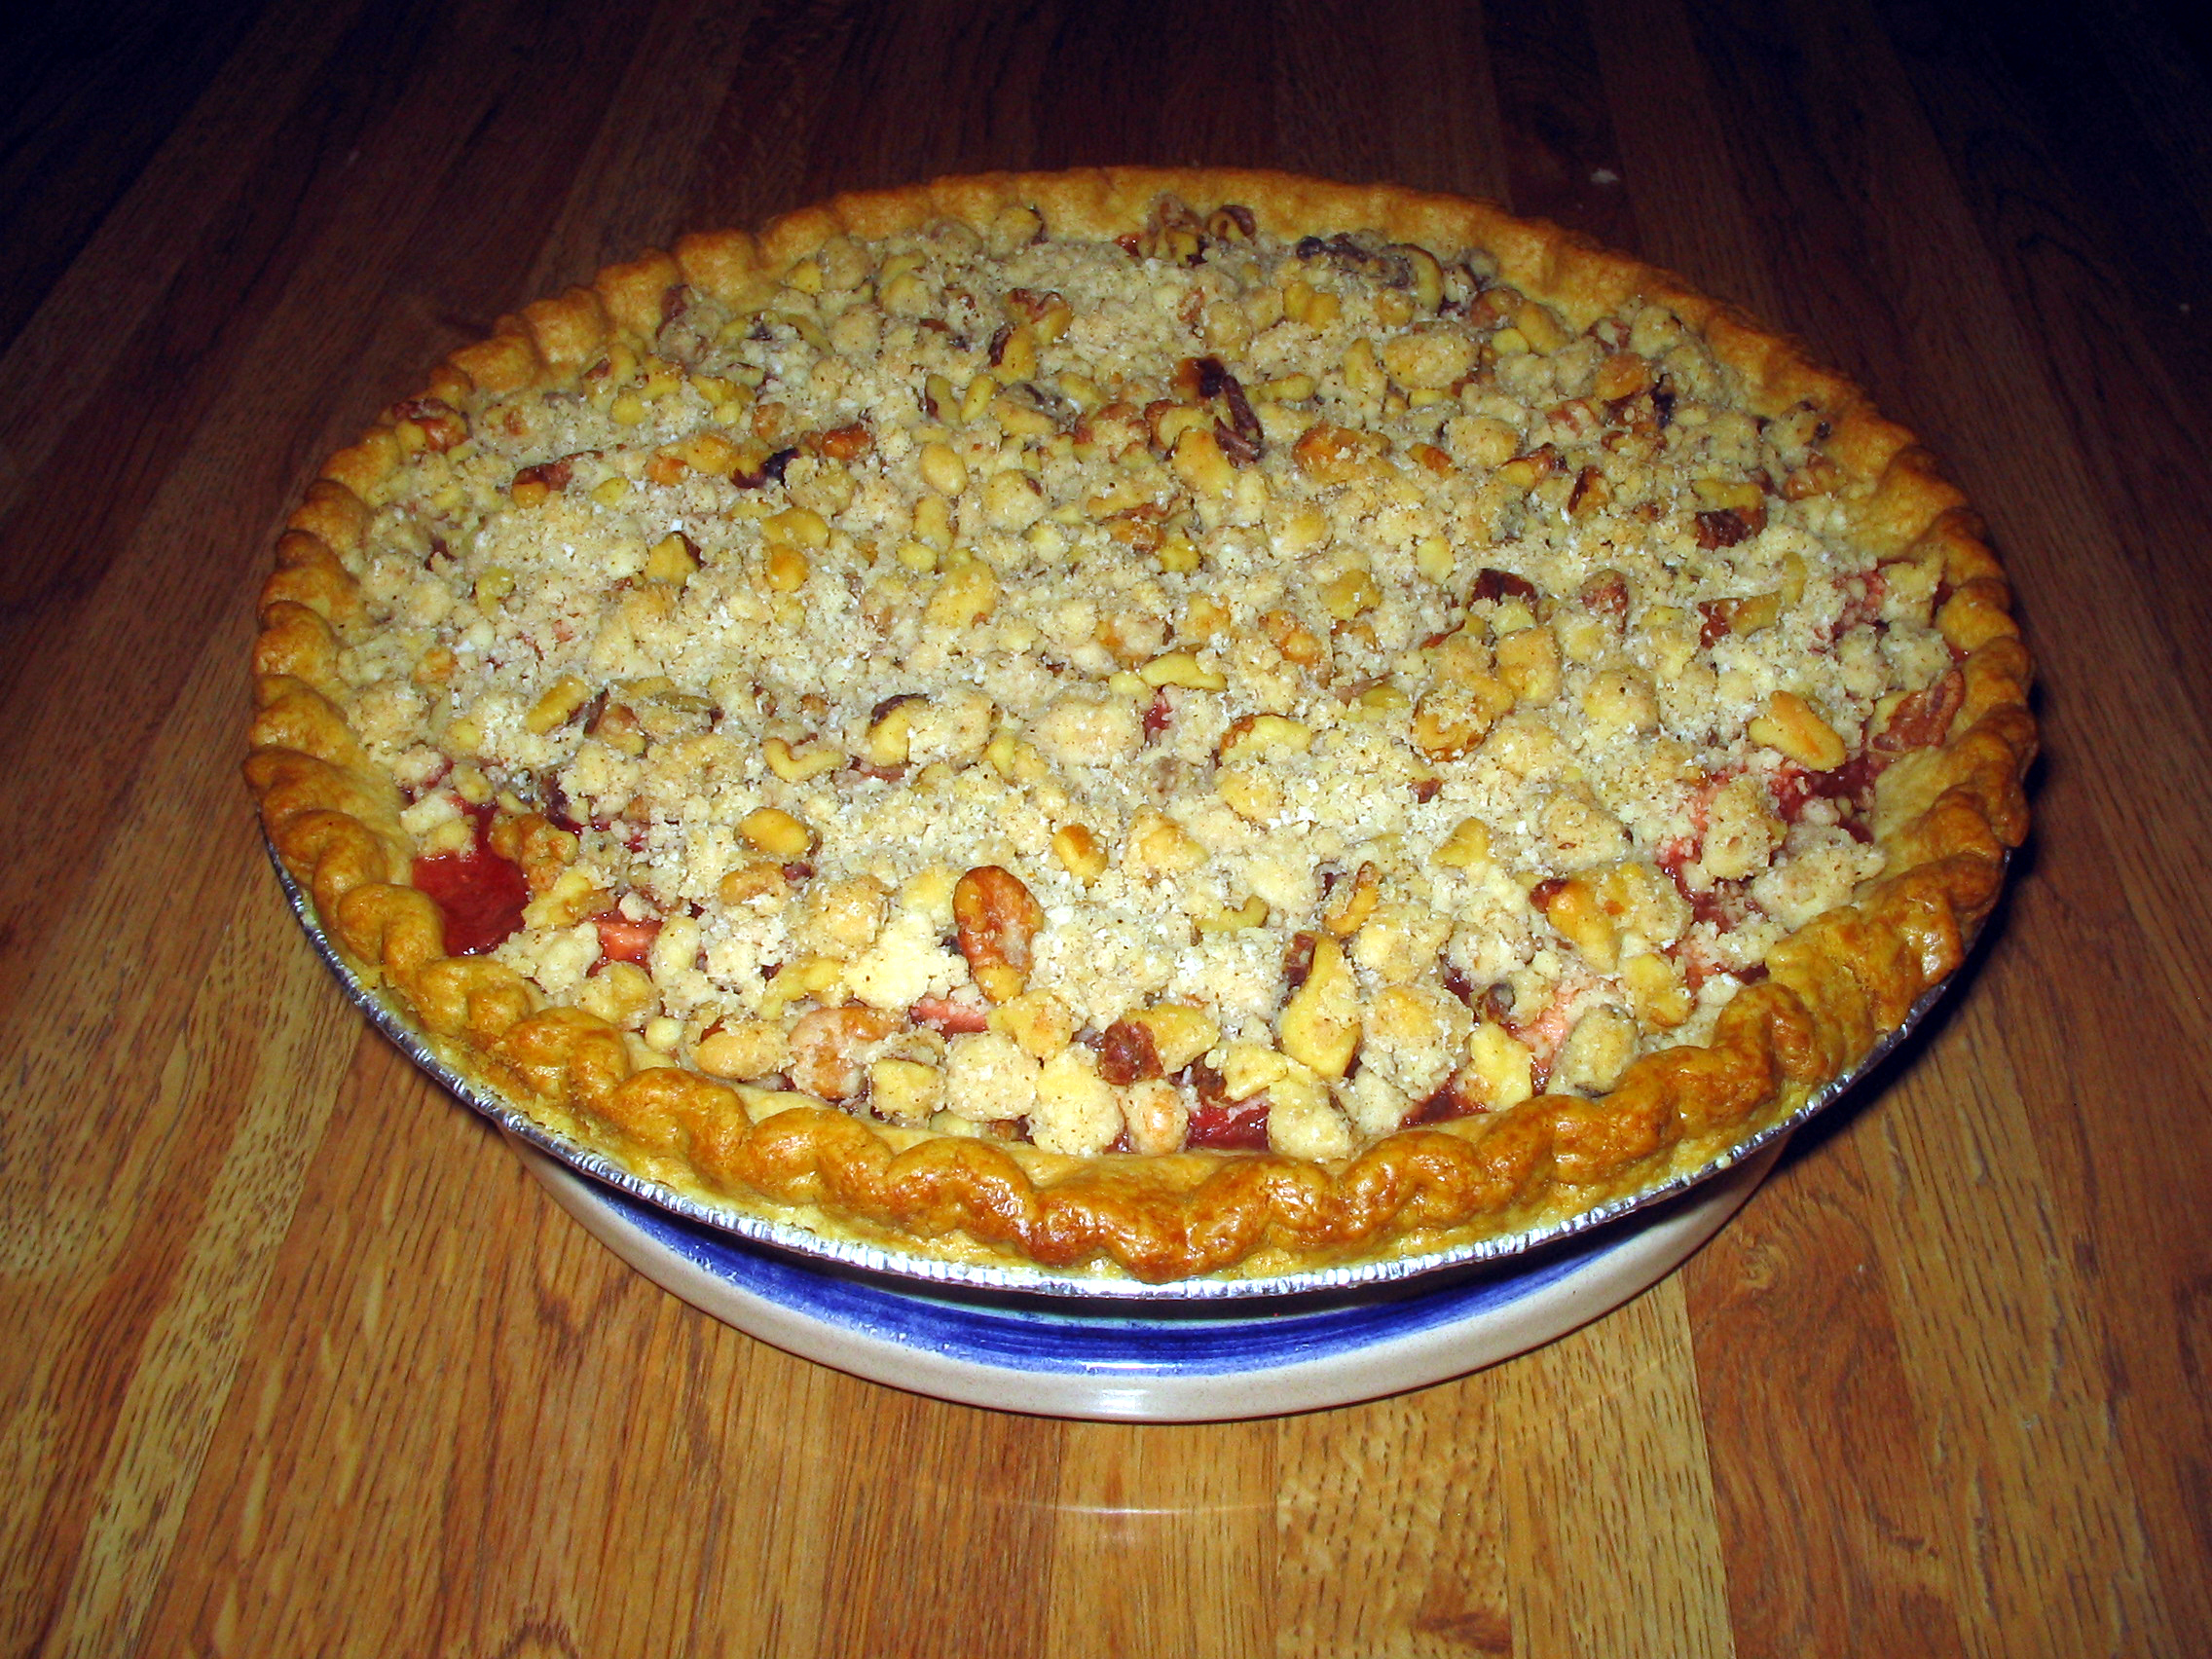 Rhubarb-apple pie, May 2009